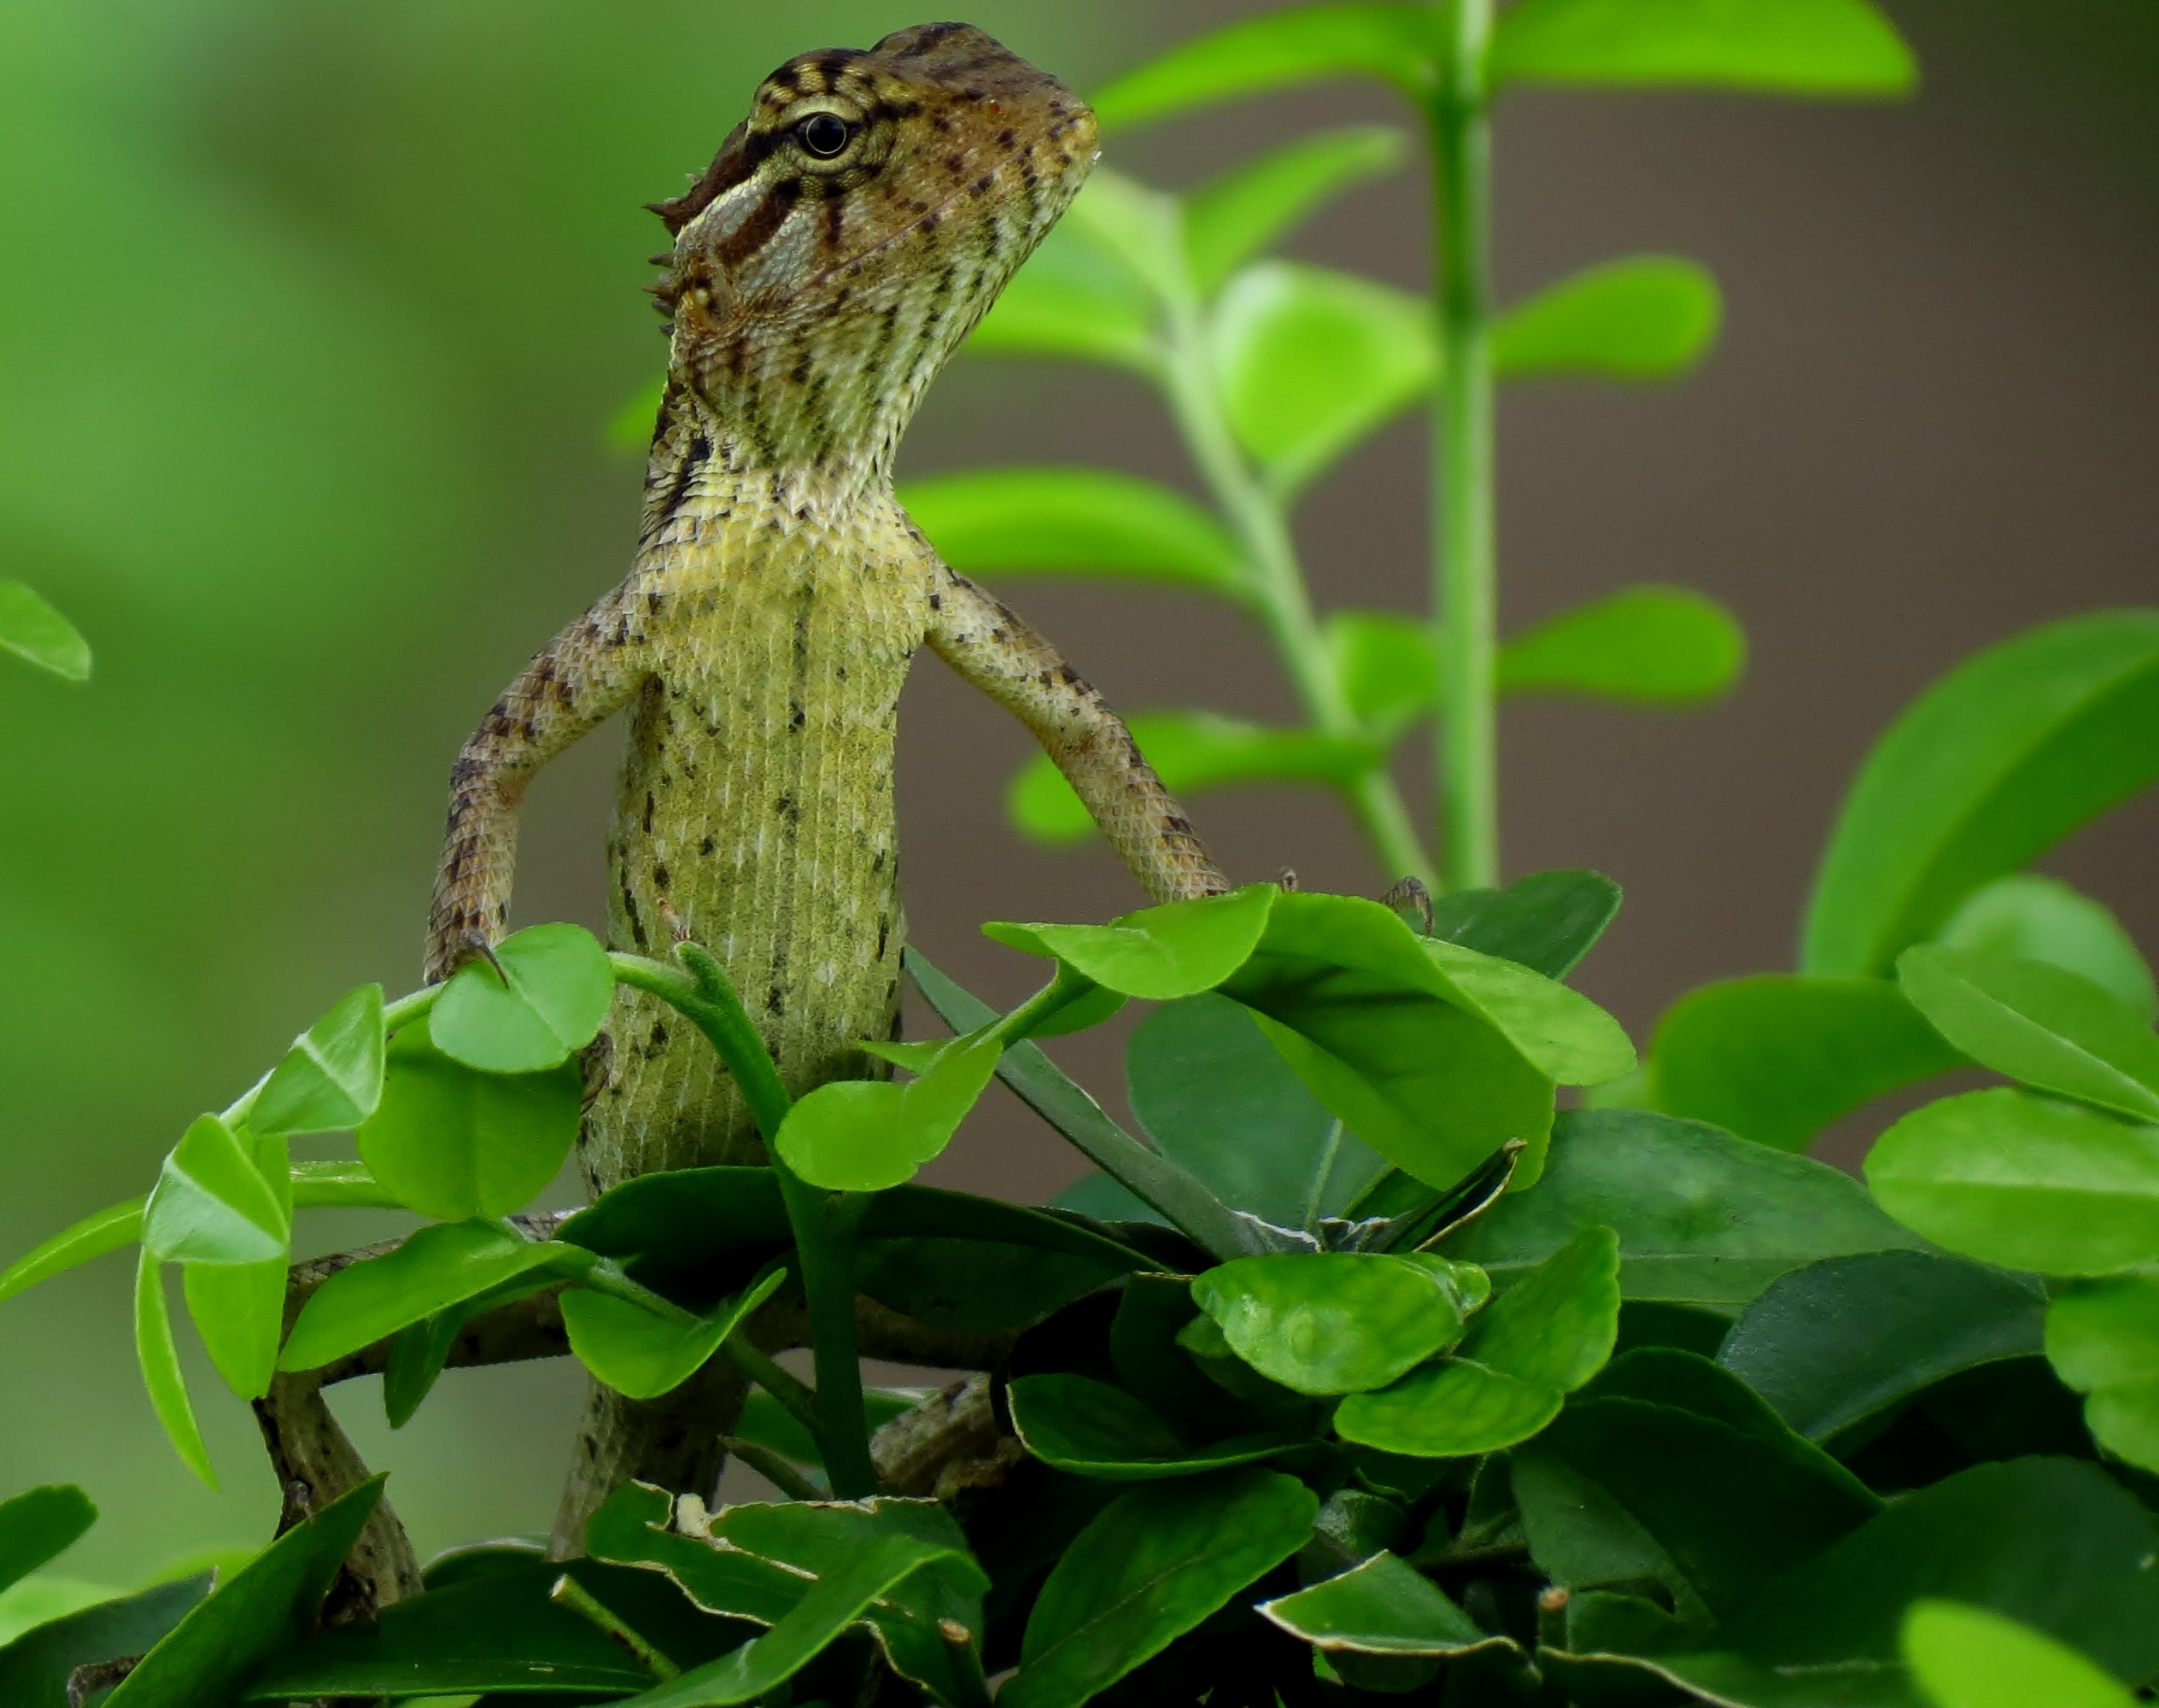 brown lizard on green leaf plant